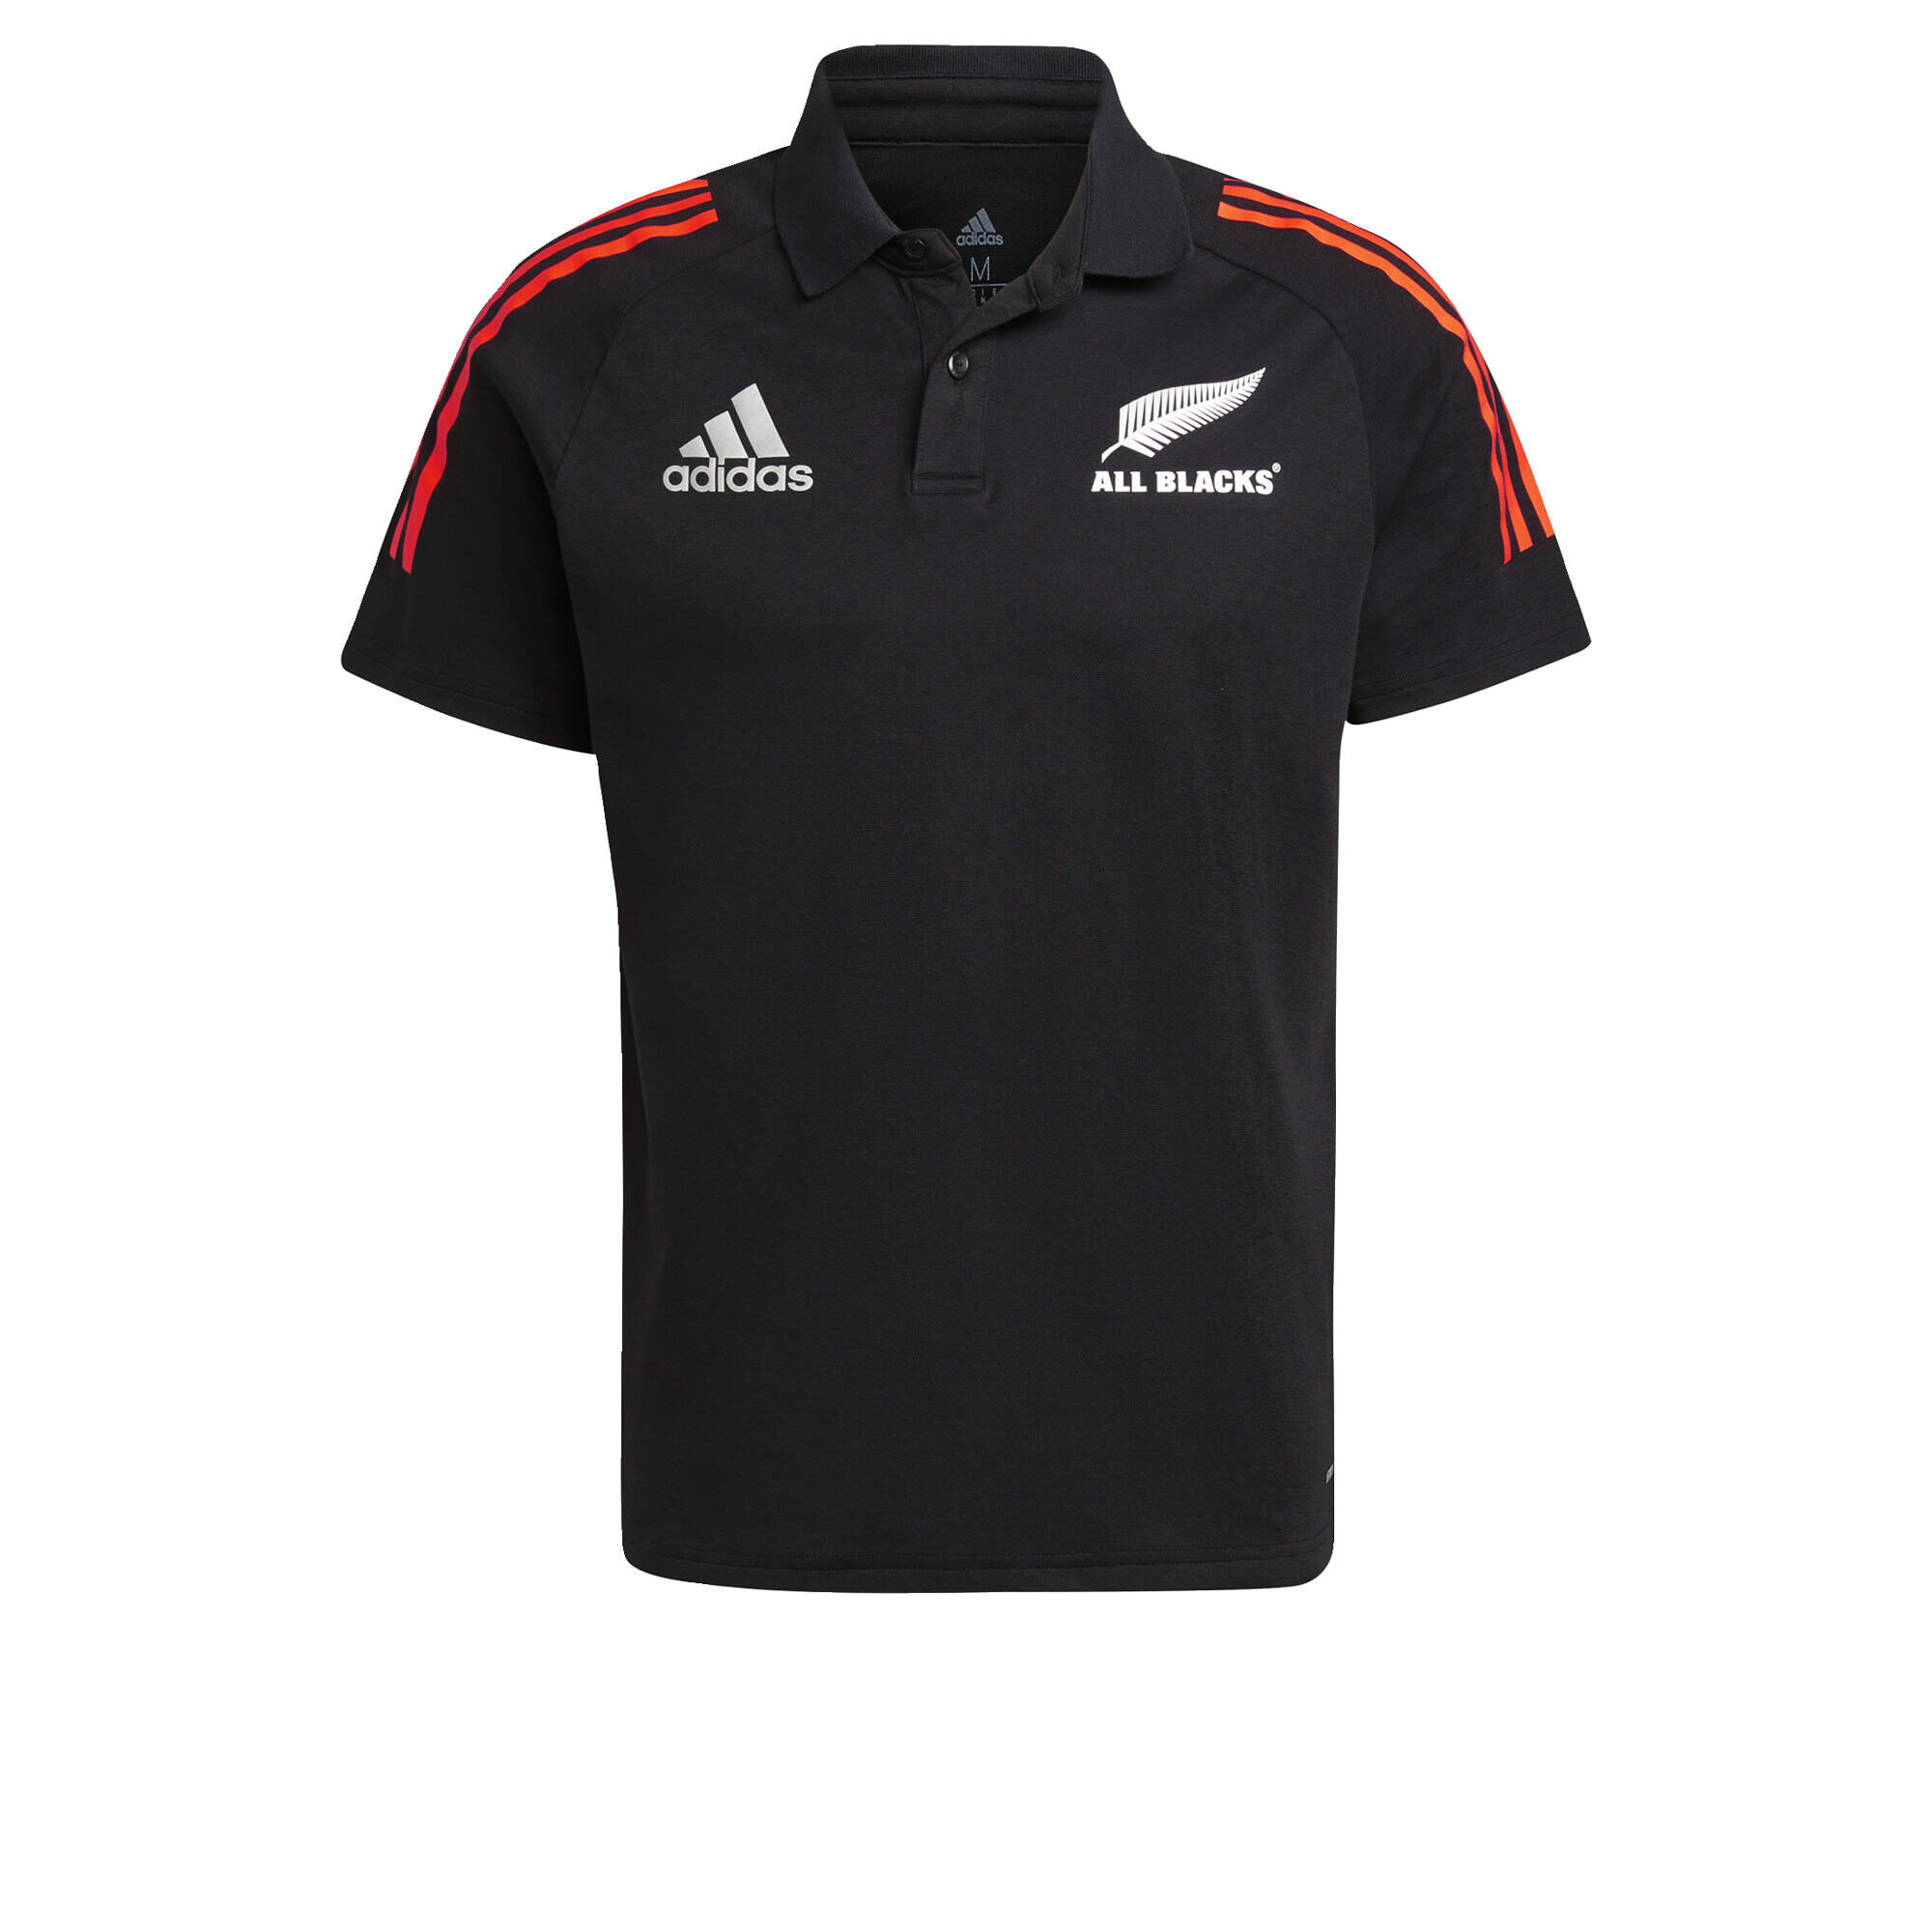 All Blacks Primeblue Rugby Polo Shirt 2/5